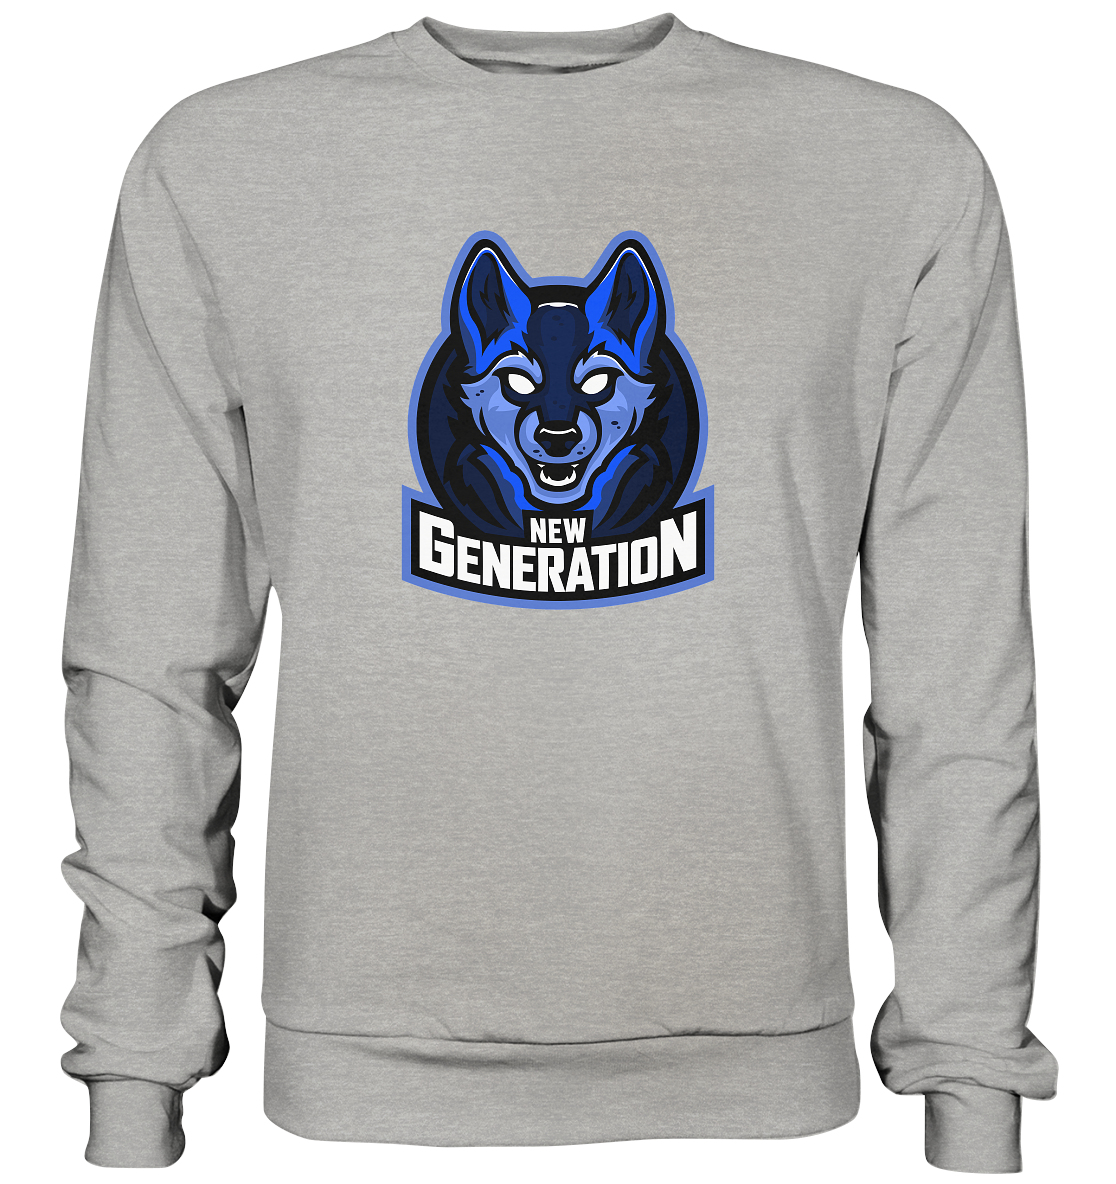 NEW GENERATION - Basic Sweatshirt